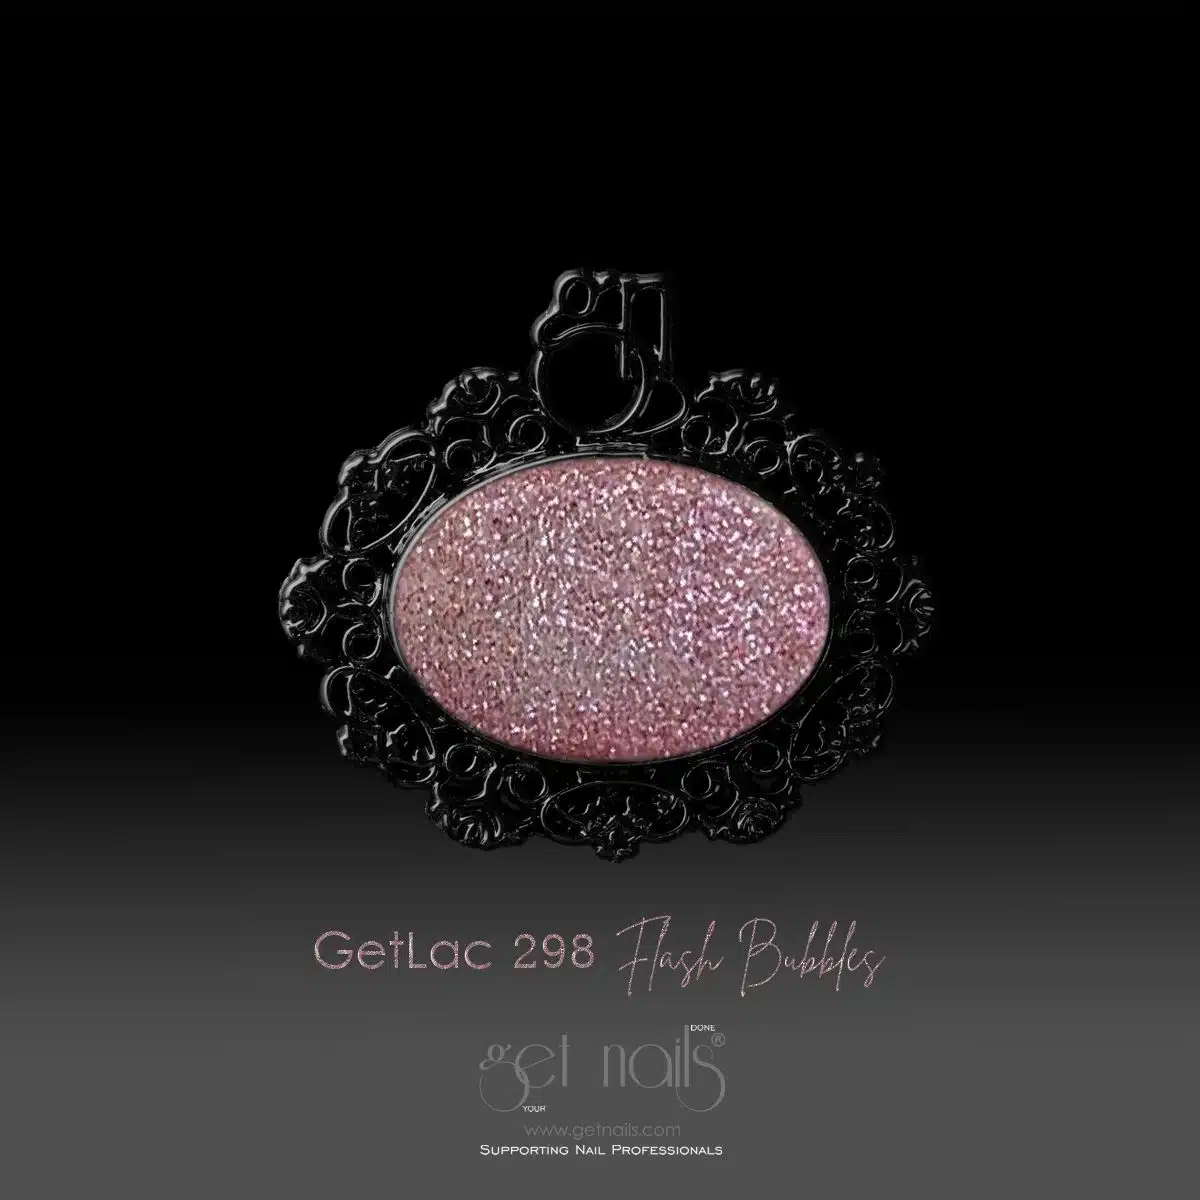 Get Nails Austria - GetLac 298 Flash Bubbles 15g